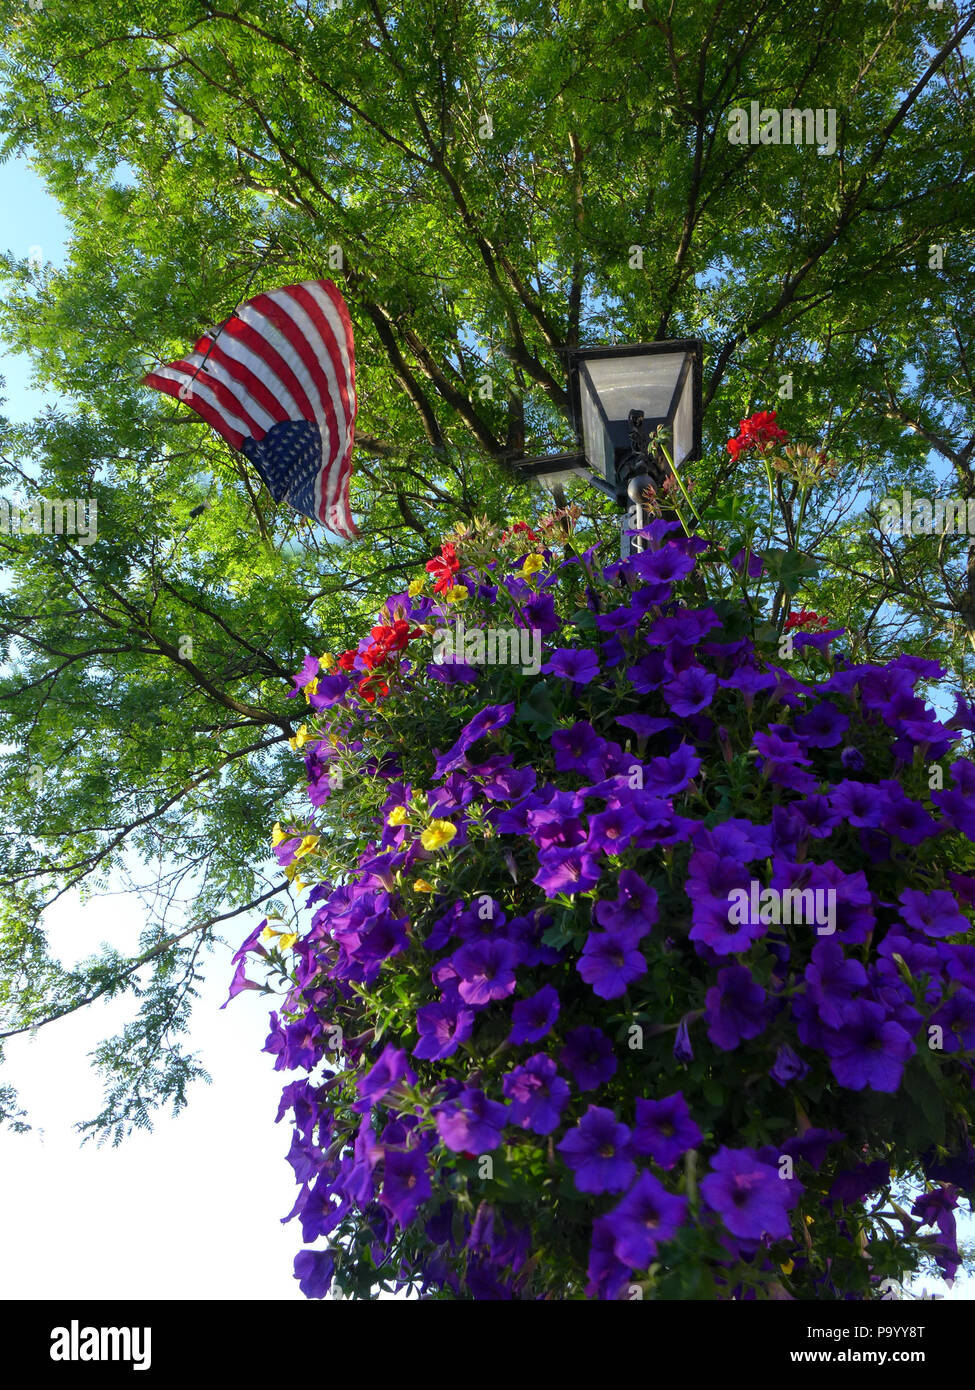 Decorative flower basket and flag on Main Street. Stock Photo